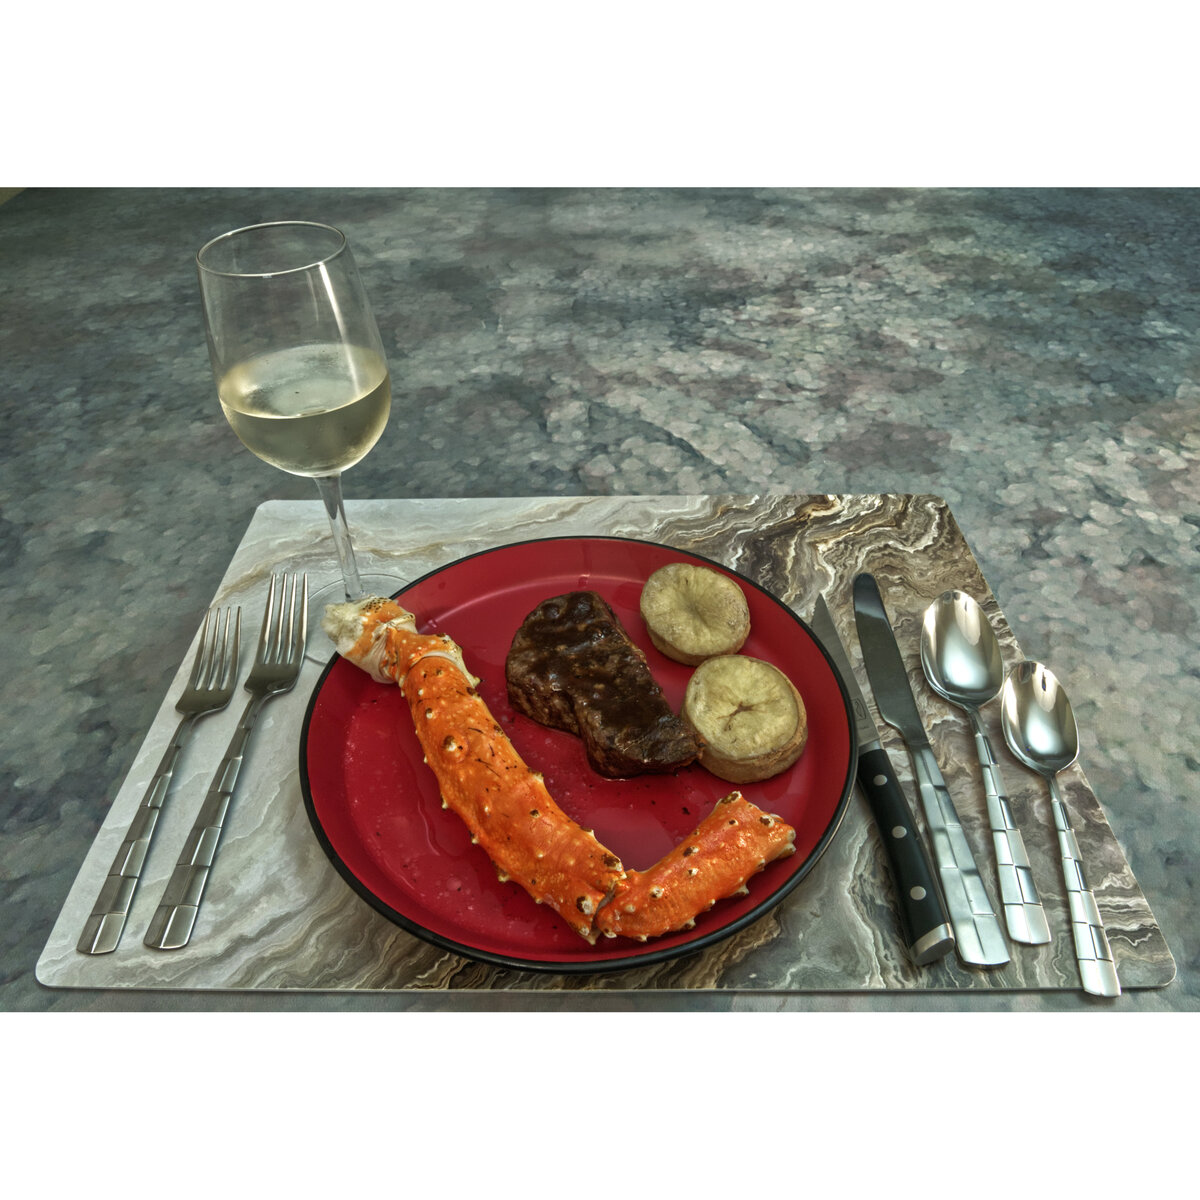 Tritip Steak, King Crab Leg and Potato with Sauvignon Blancb Wine